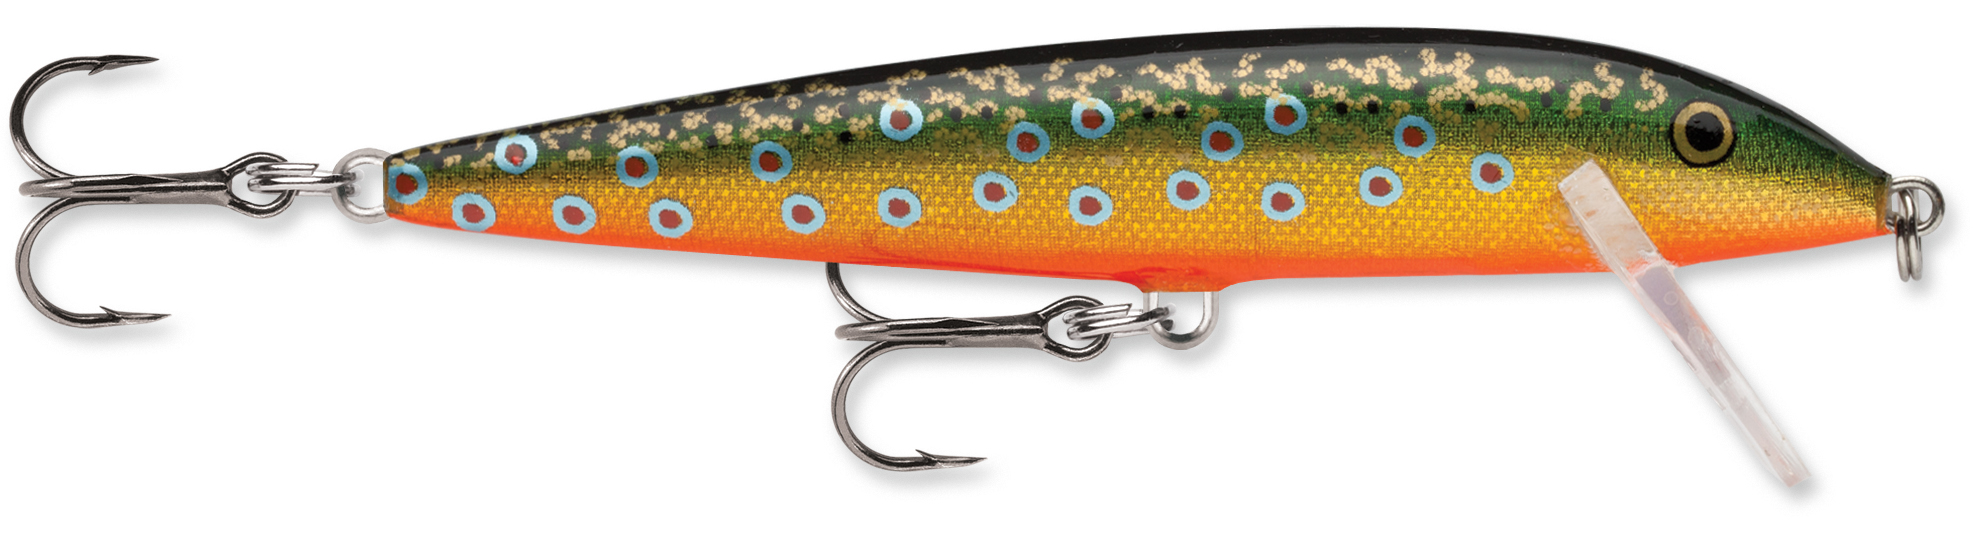 Rapala CountDown #11 - Brook Trout - Precision Fishing